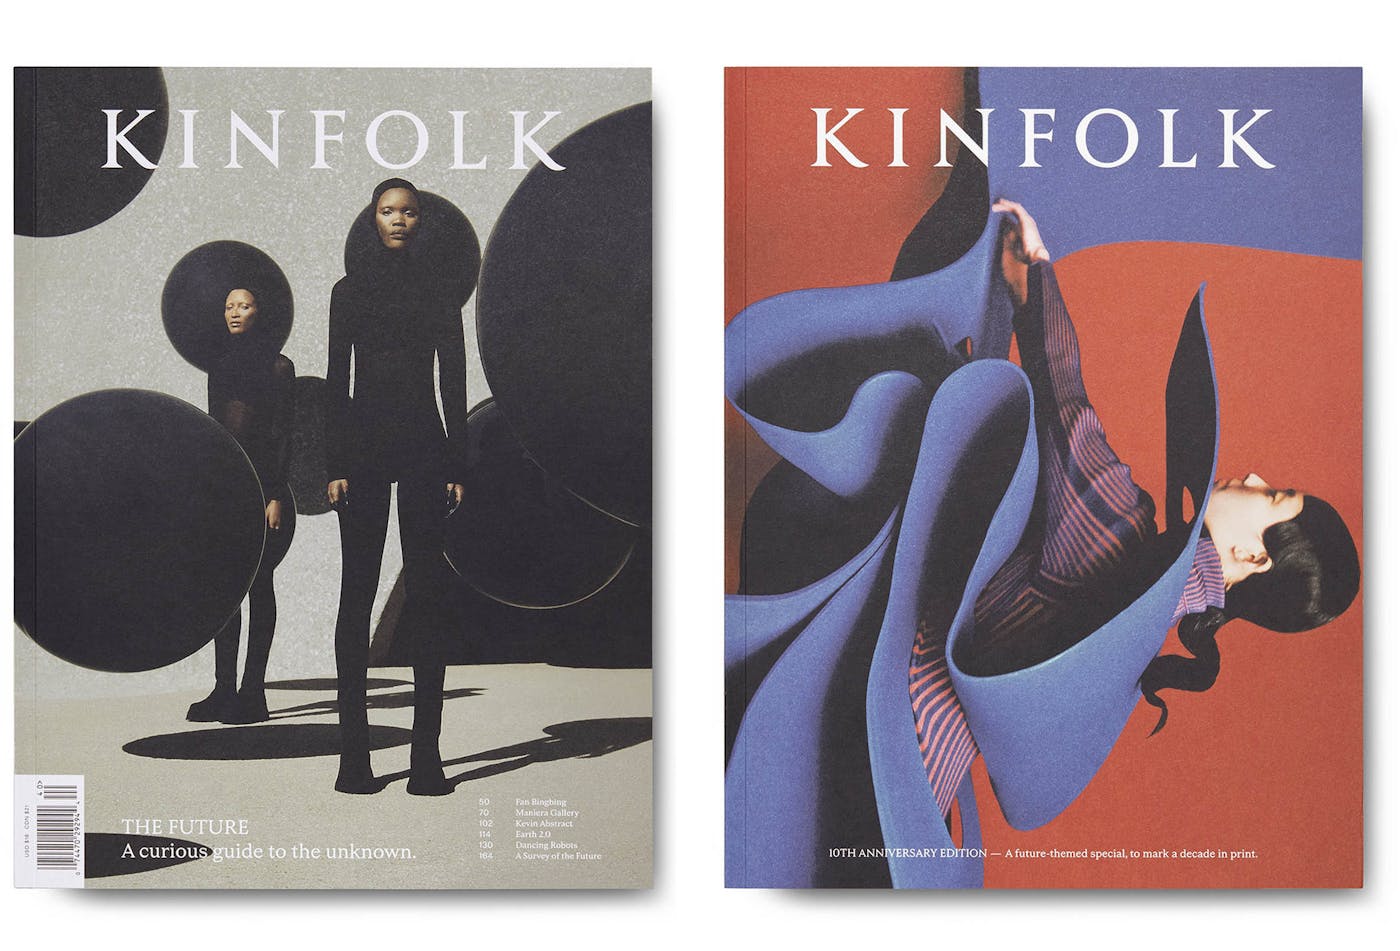 KINFOLK40 COVERS BOTH copy 3